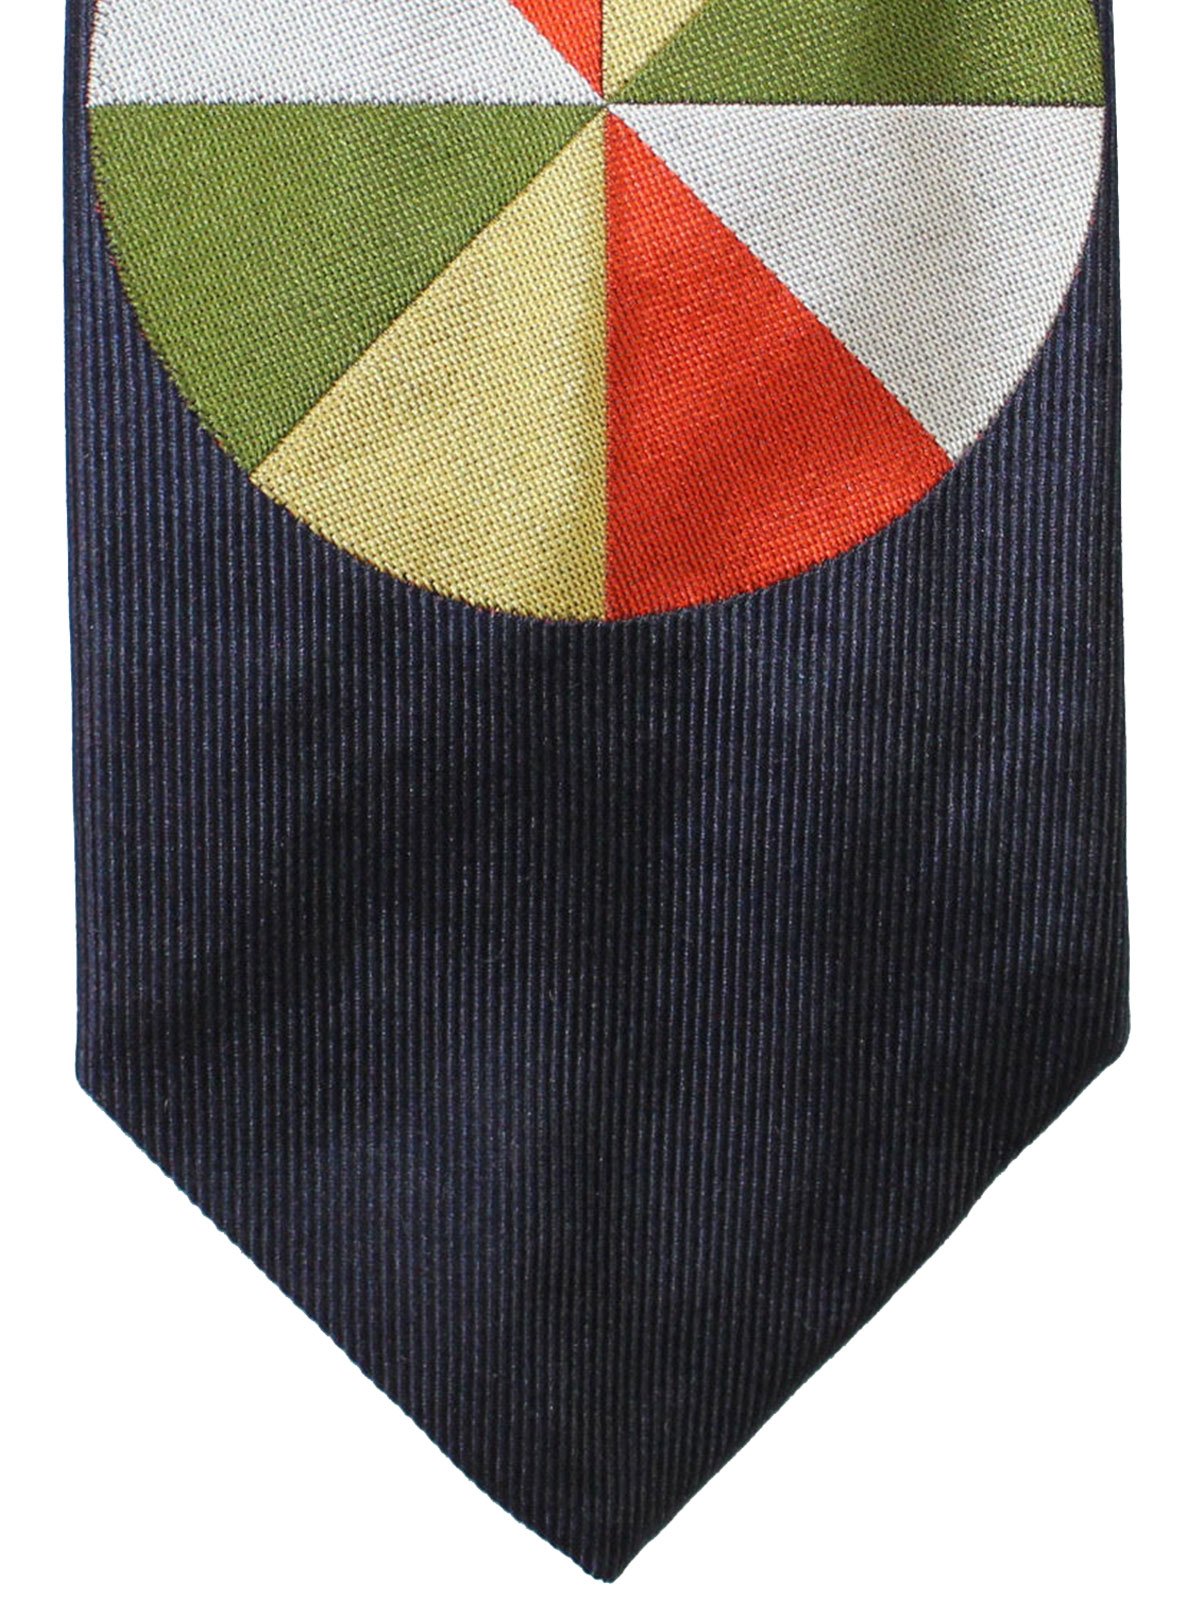 Gene Meyer Silk Tie Black Orange Green Circle